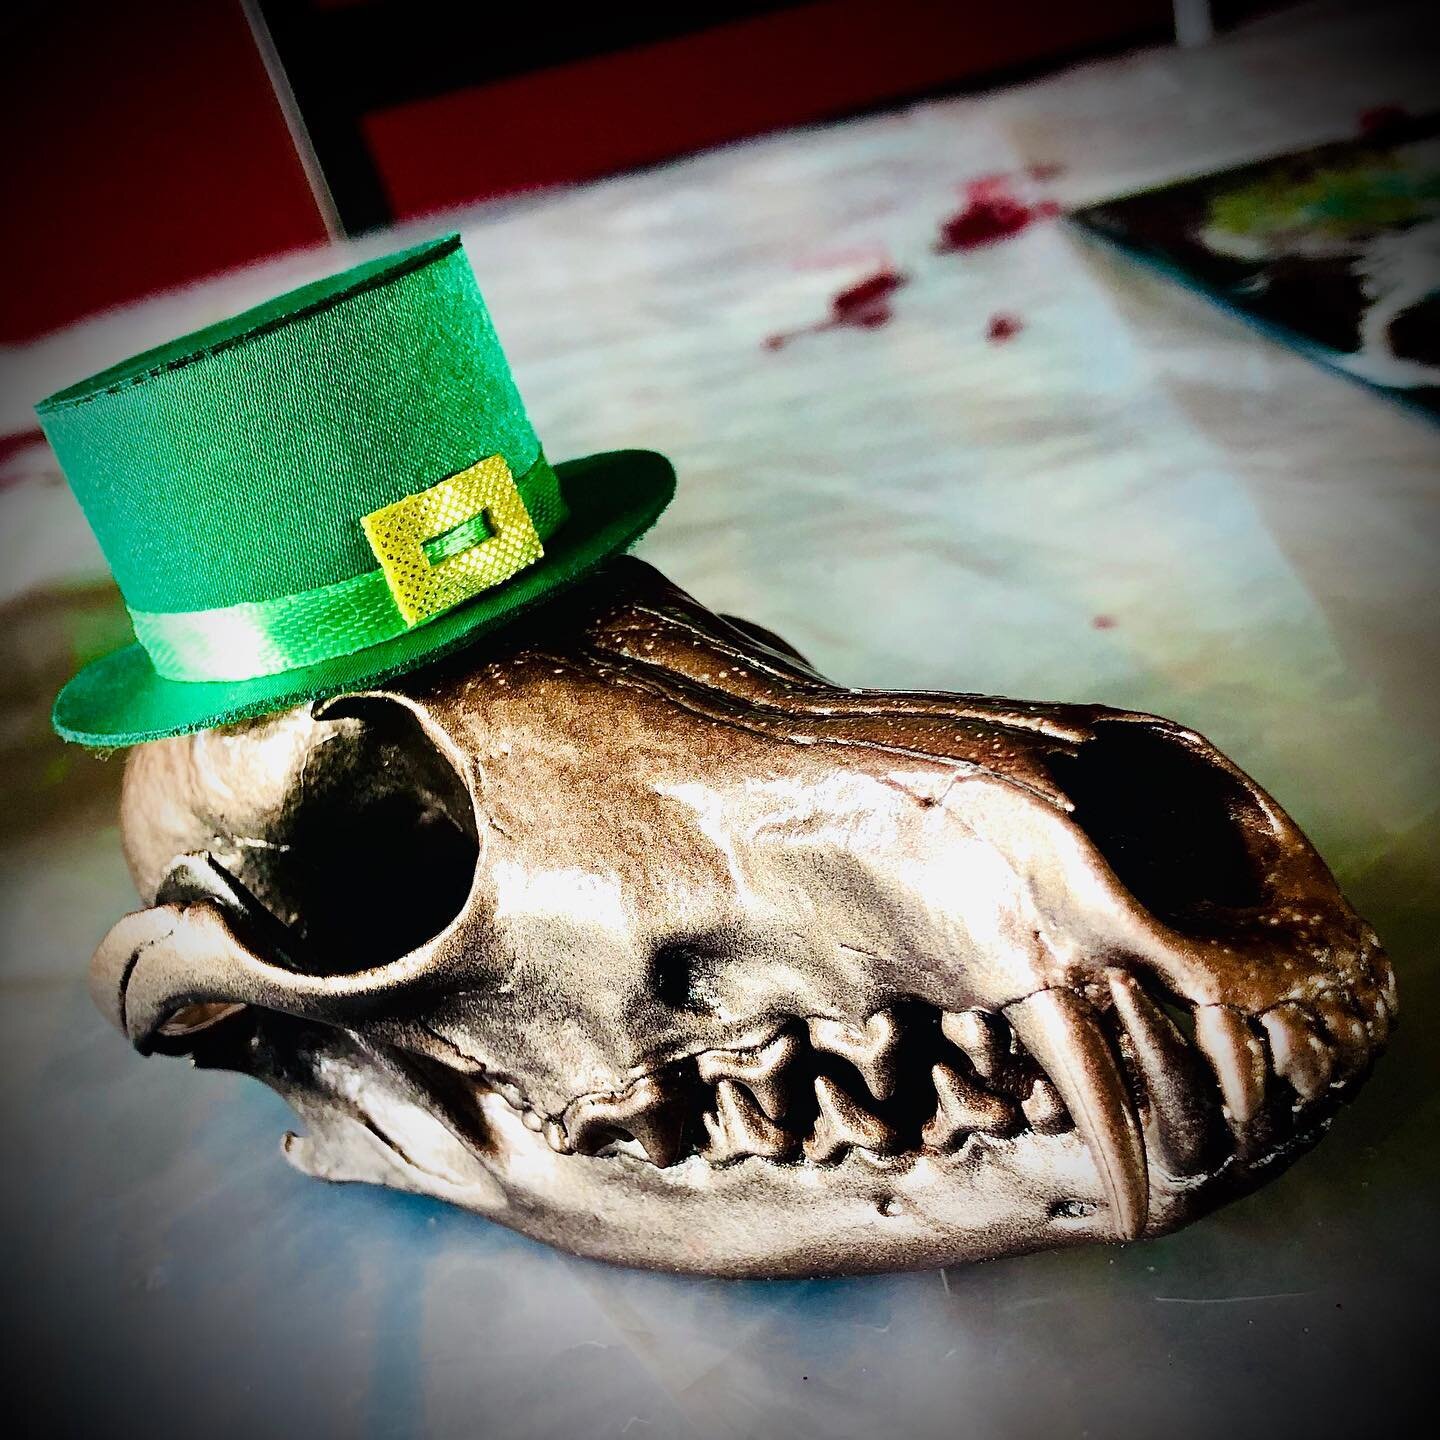 We have a fox leprechaun in the making!! ☘️ found the perfect hat! .
.
.
#leprechaun #shamrock #stpatricksday #stpattysday #foxskull #skull #skullartist #northdakotaartist #watfordcitynd #bonecollector #creativesoul #artwithnature